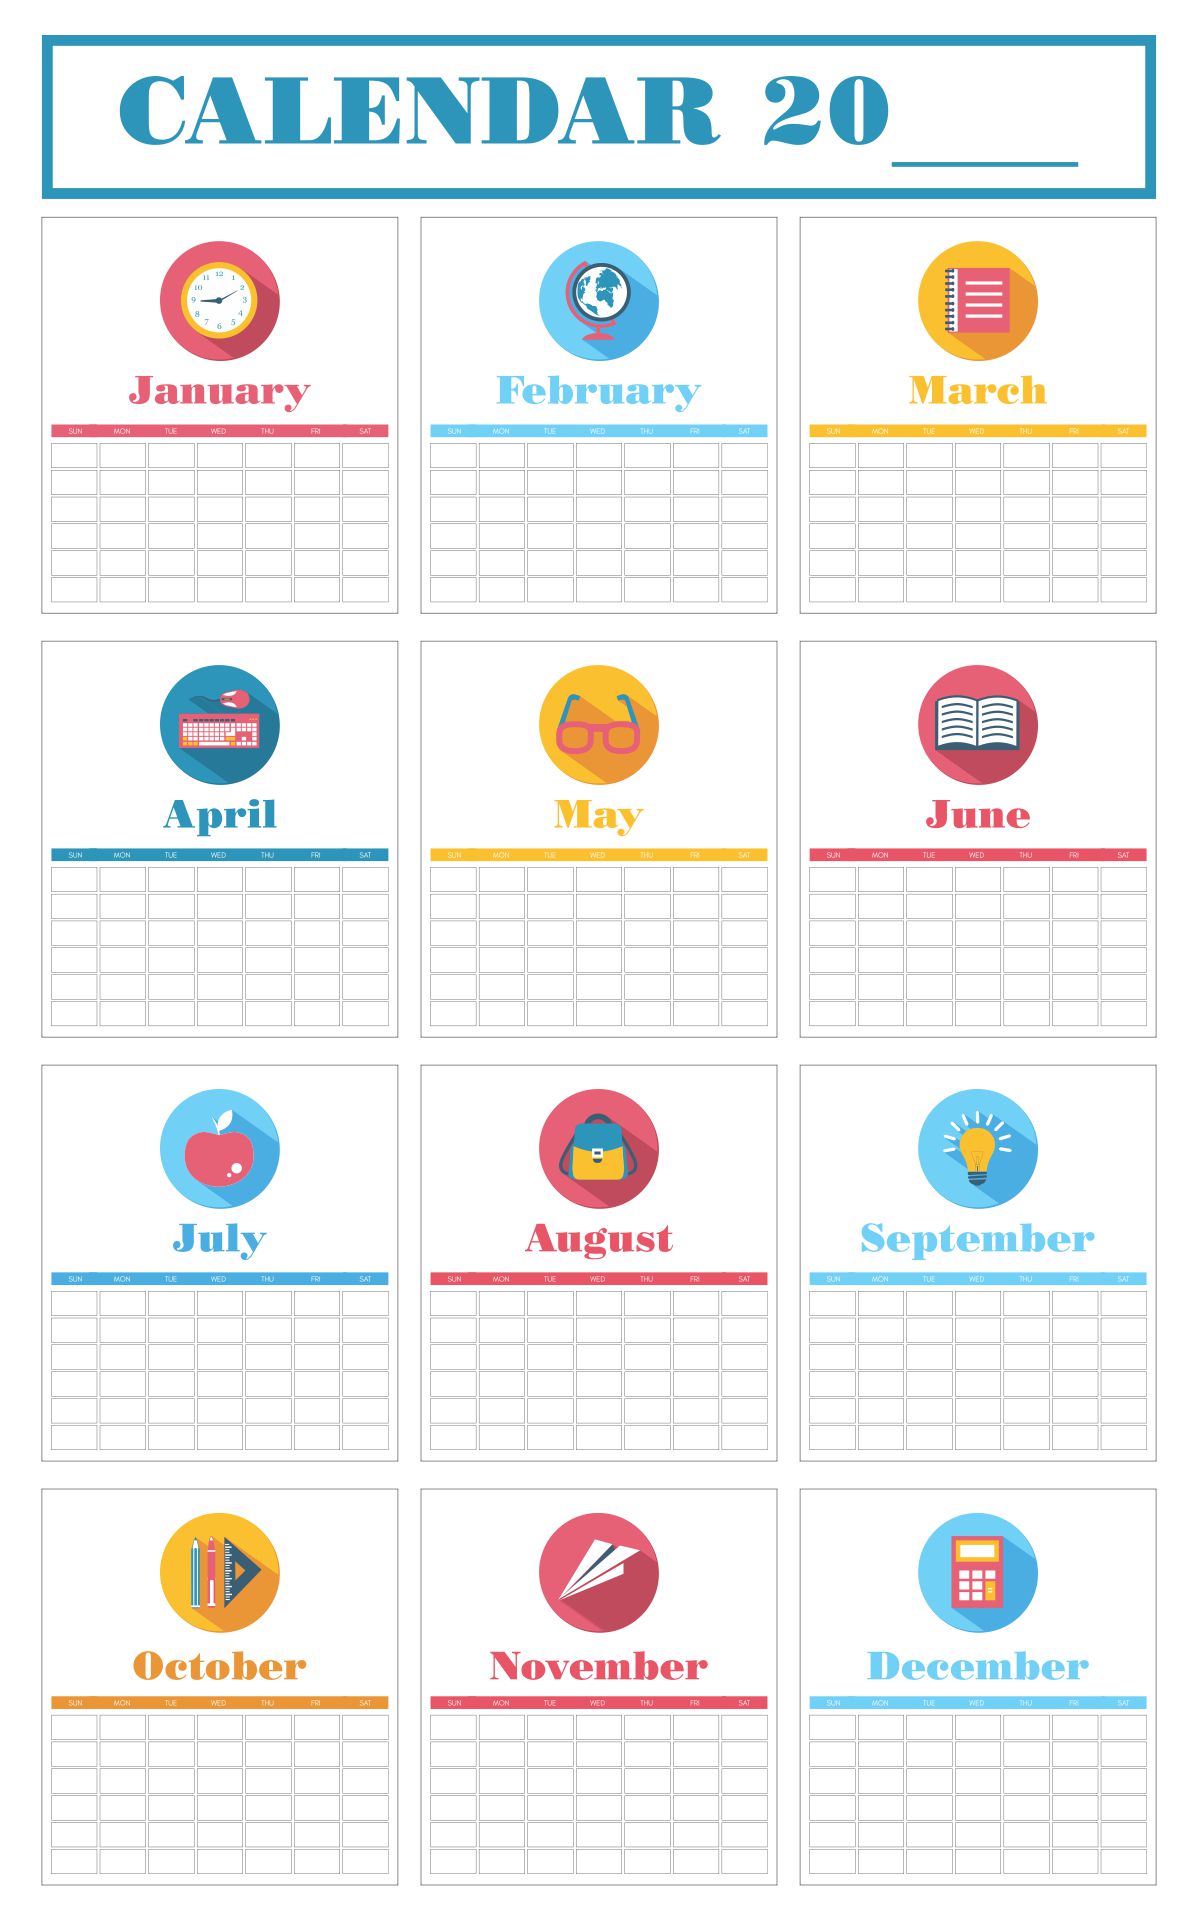 4-best-images-of-printable-calendars-for-school-teachers-school-lunch-calendar-templates